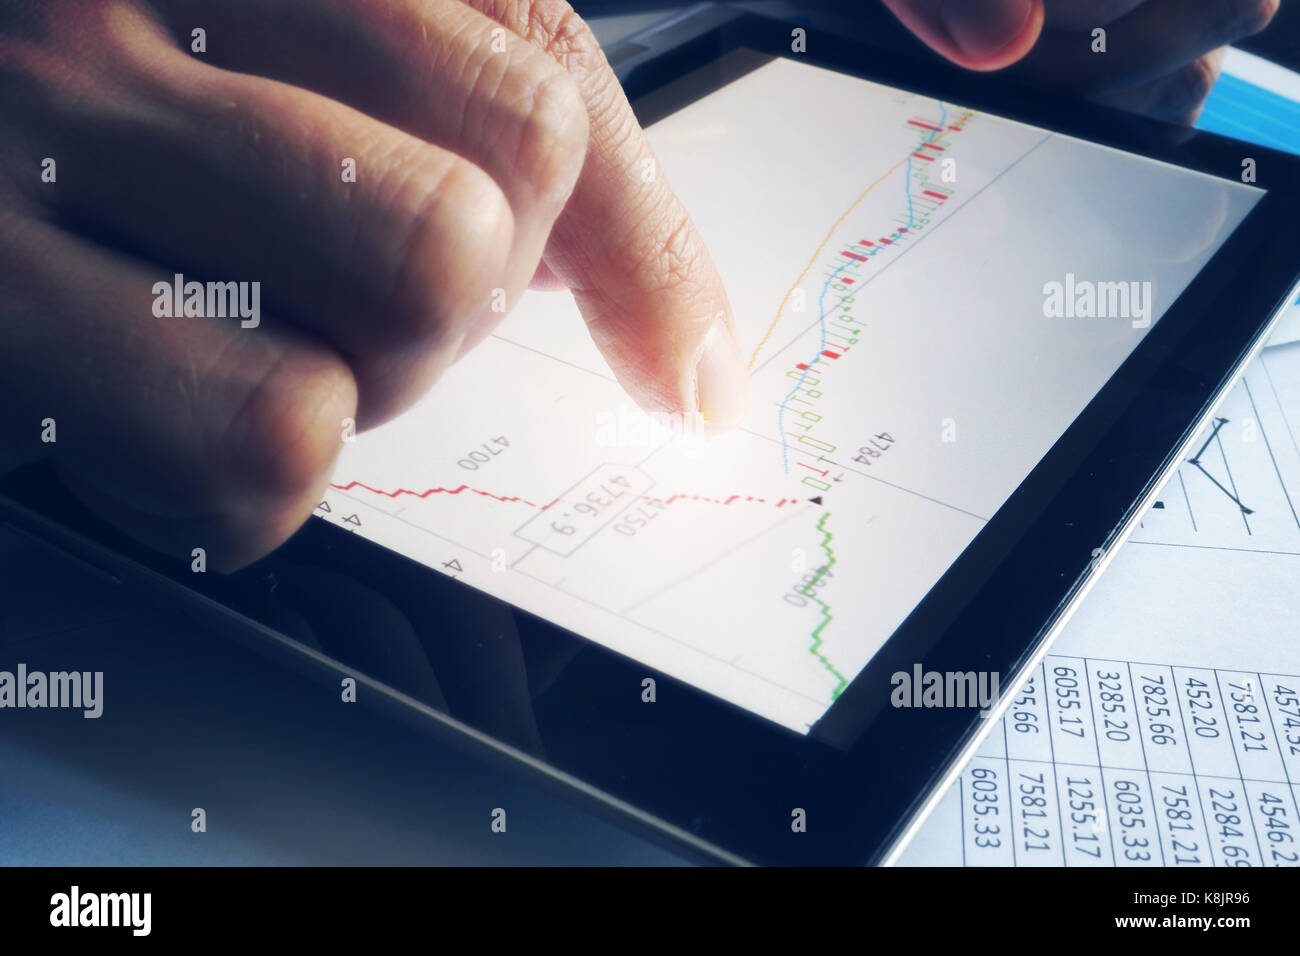 Courtier en valeurs holding tablet with candle stick graphique. stocks marchands en ligne. Banque D'Images